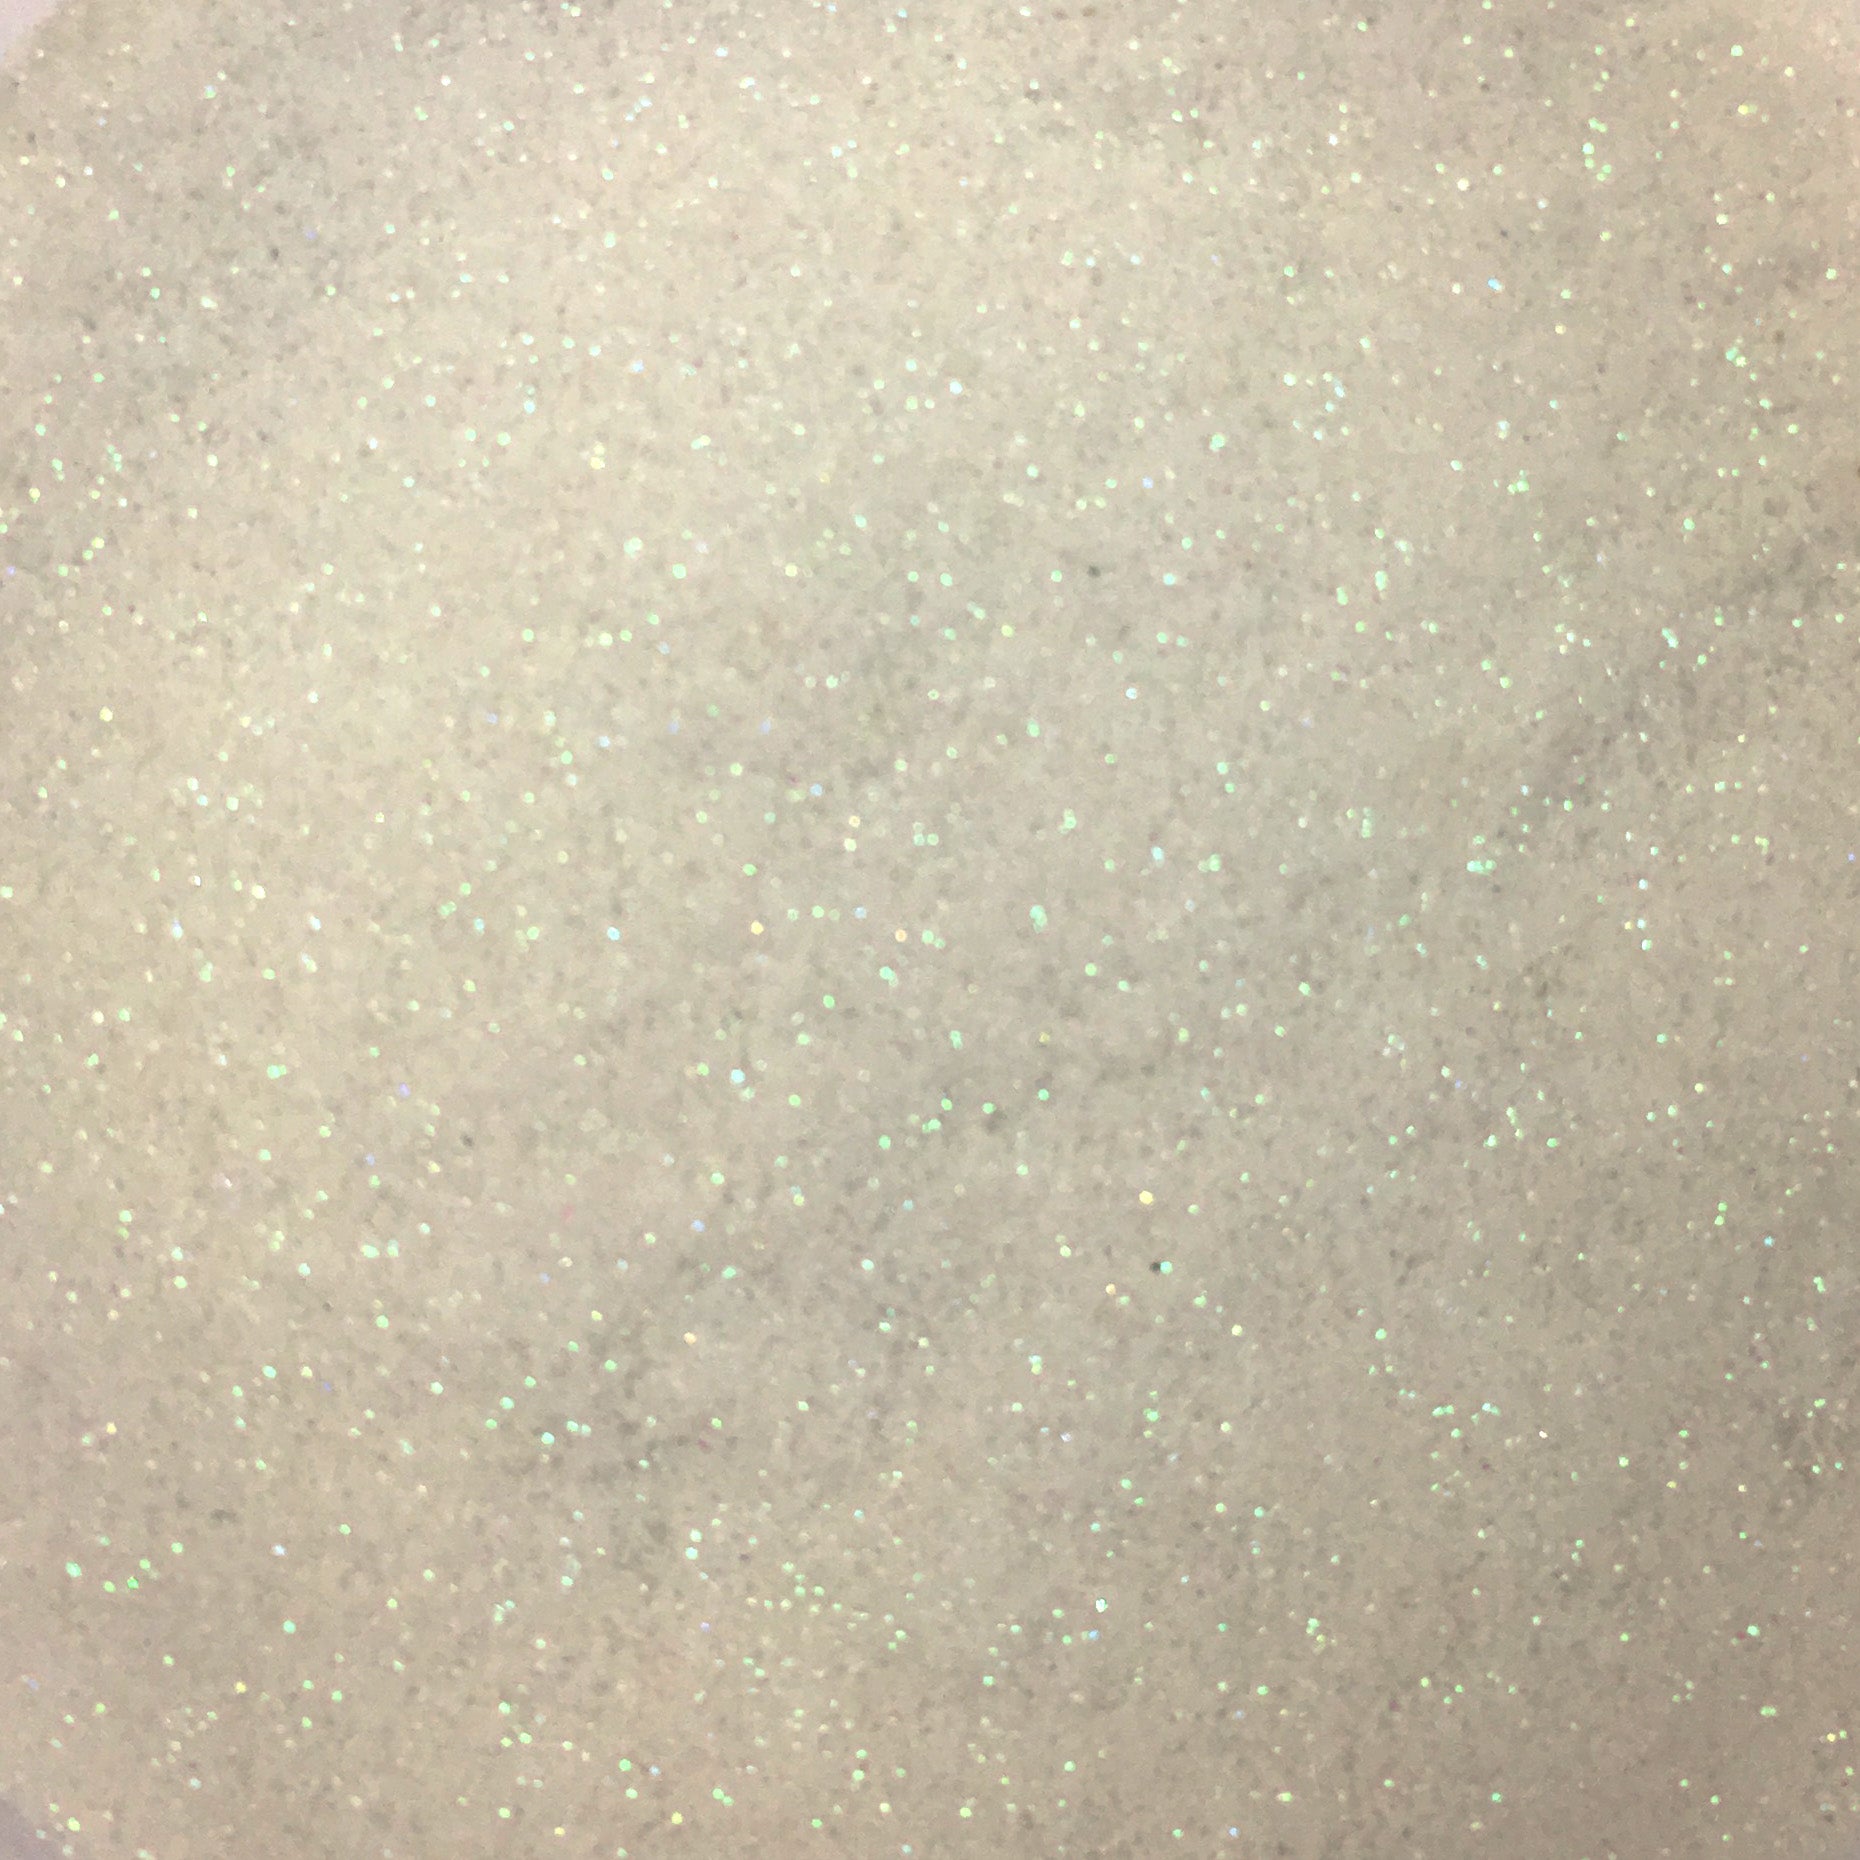 Fairy Dust - Ultra Fine Interference Glitter - White w/ Blue and Green Shift, Glitter- Lumin's Workshop